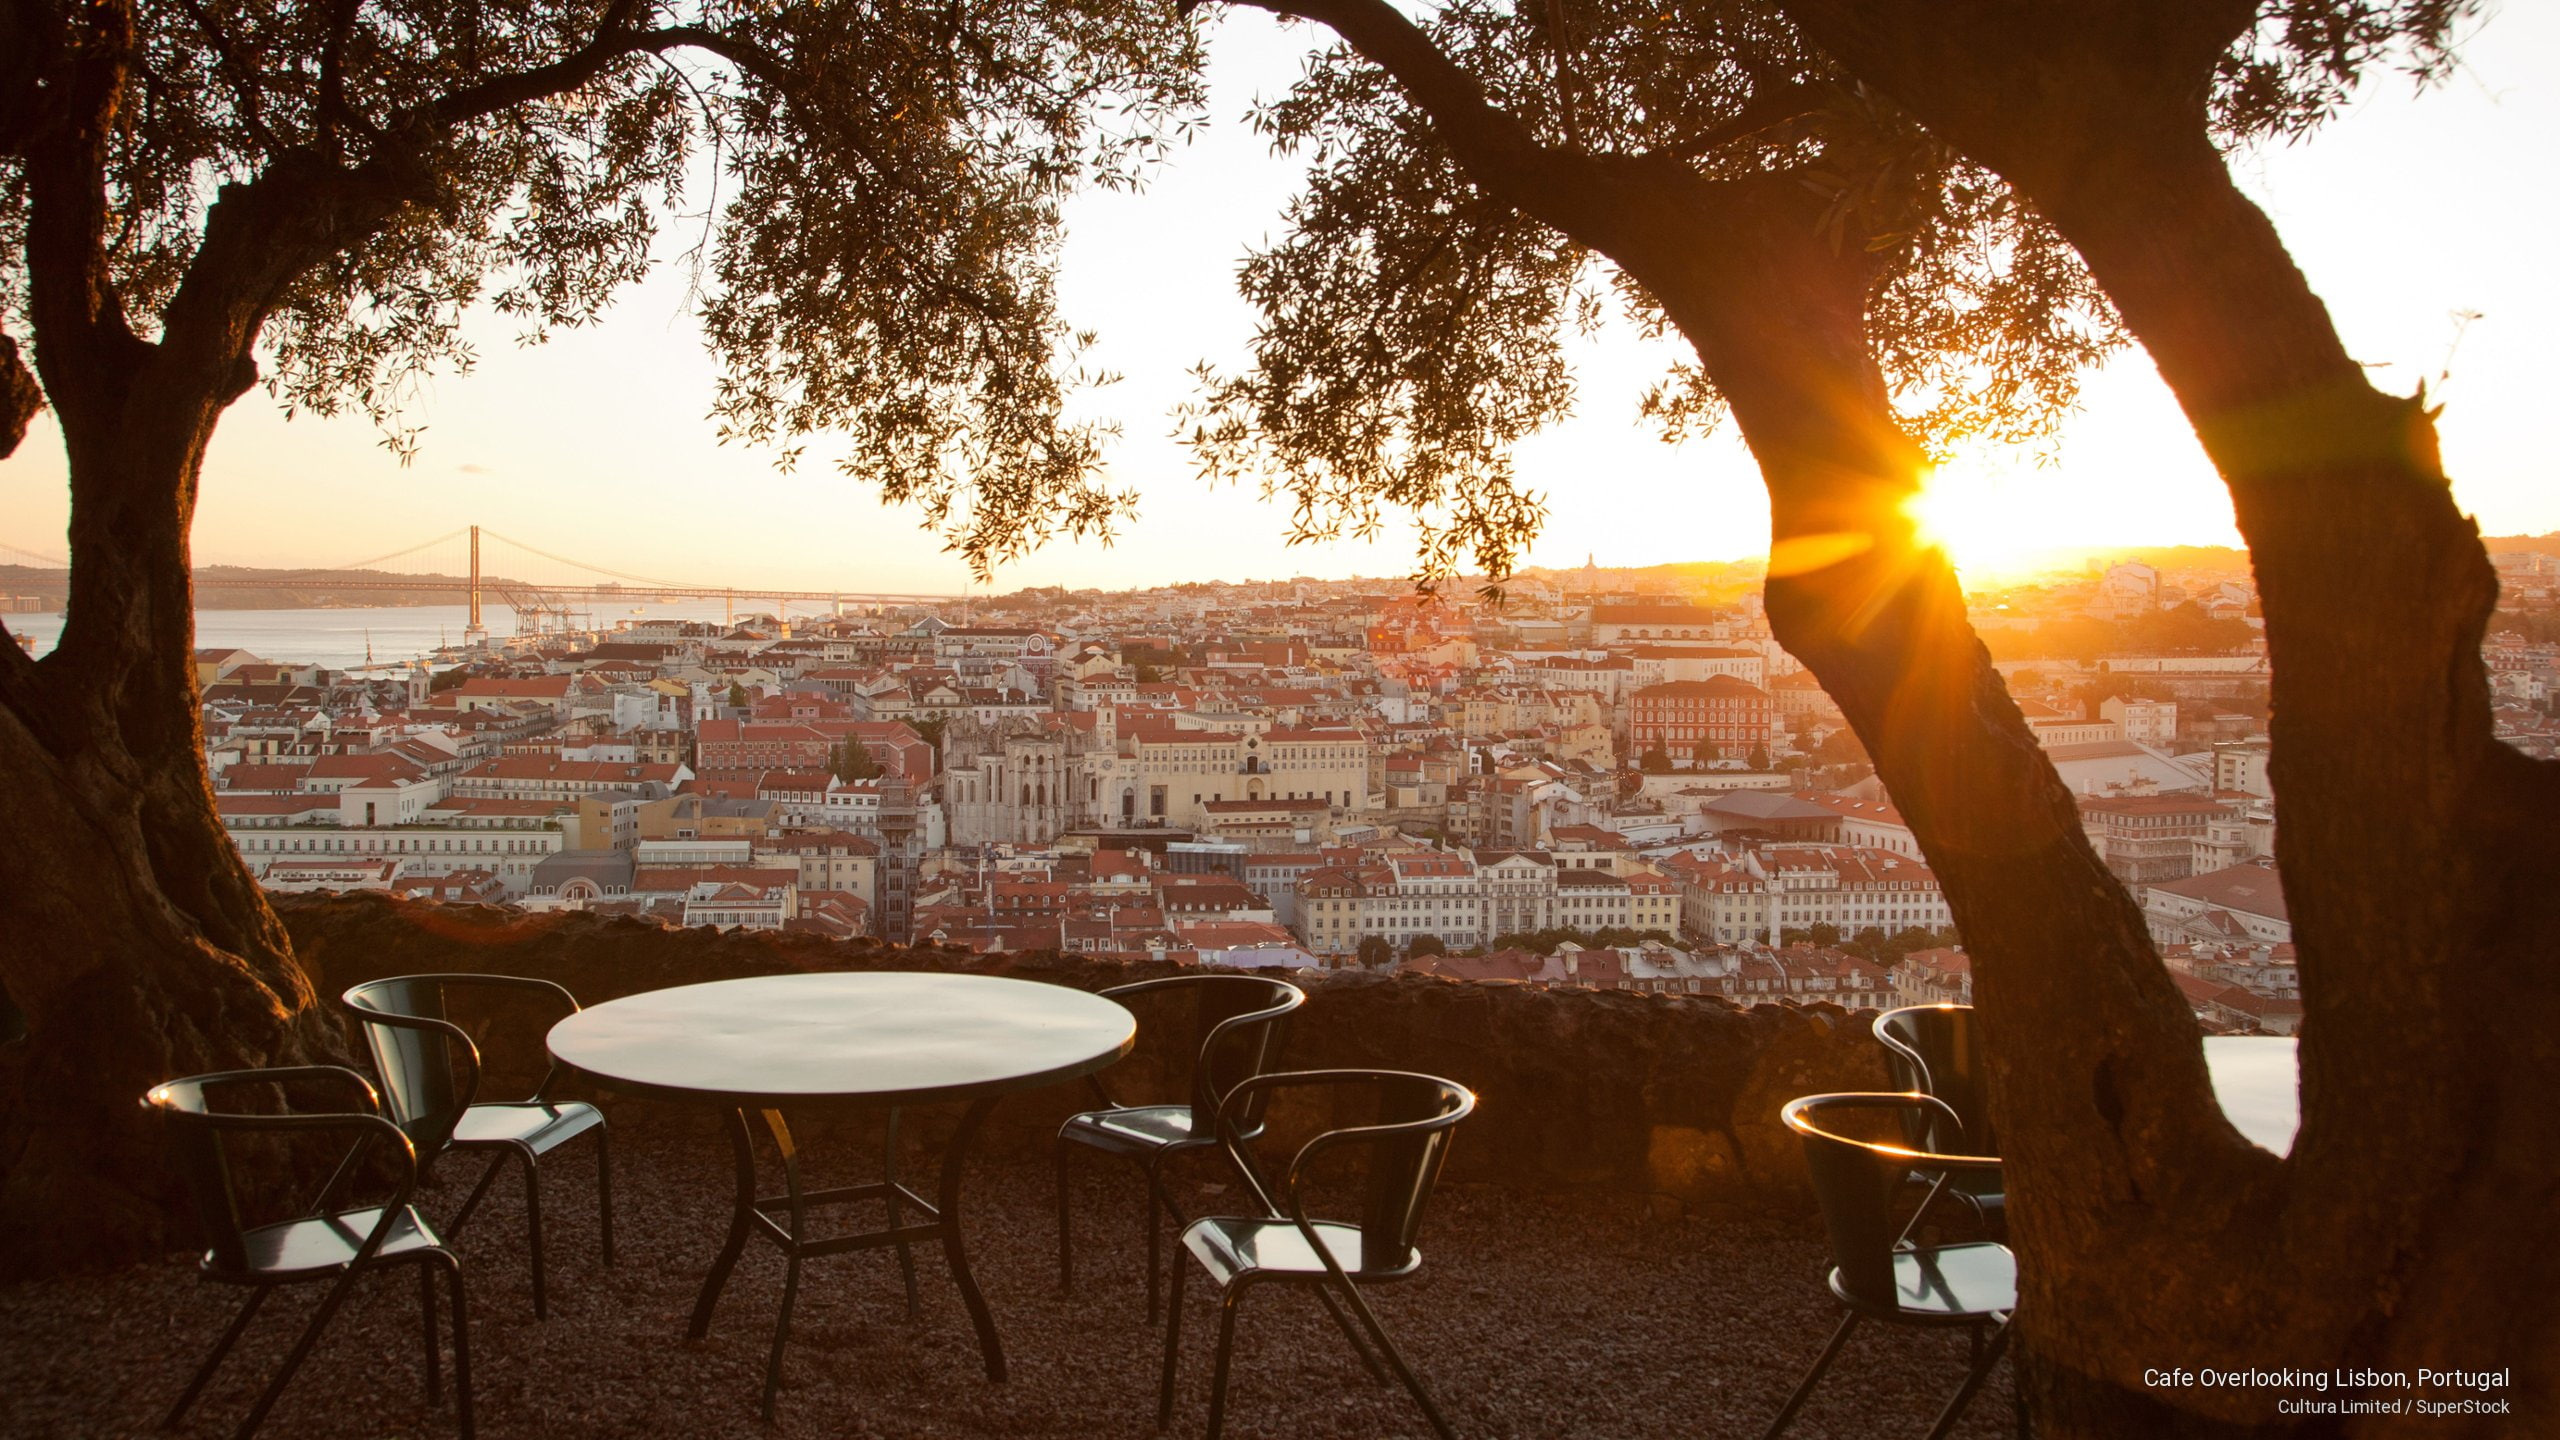 Cafe Overlooking Lisbon, Portugal, Europe